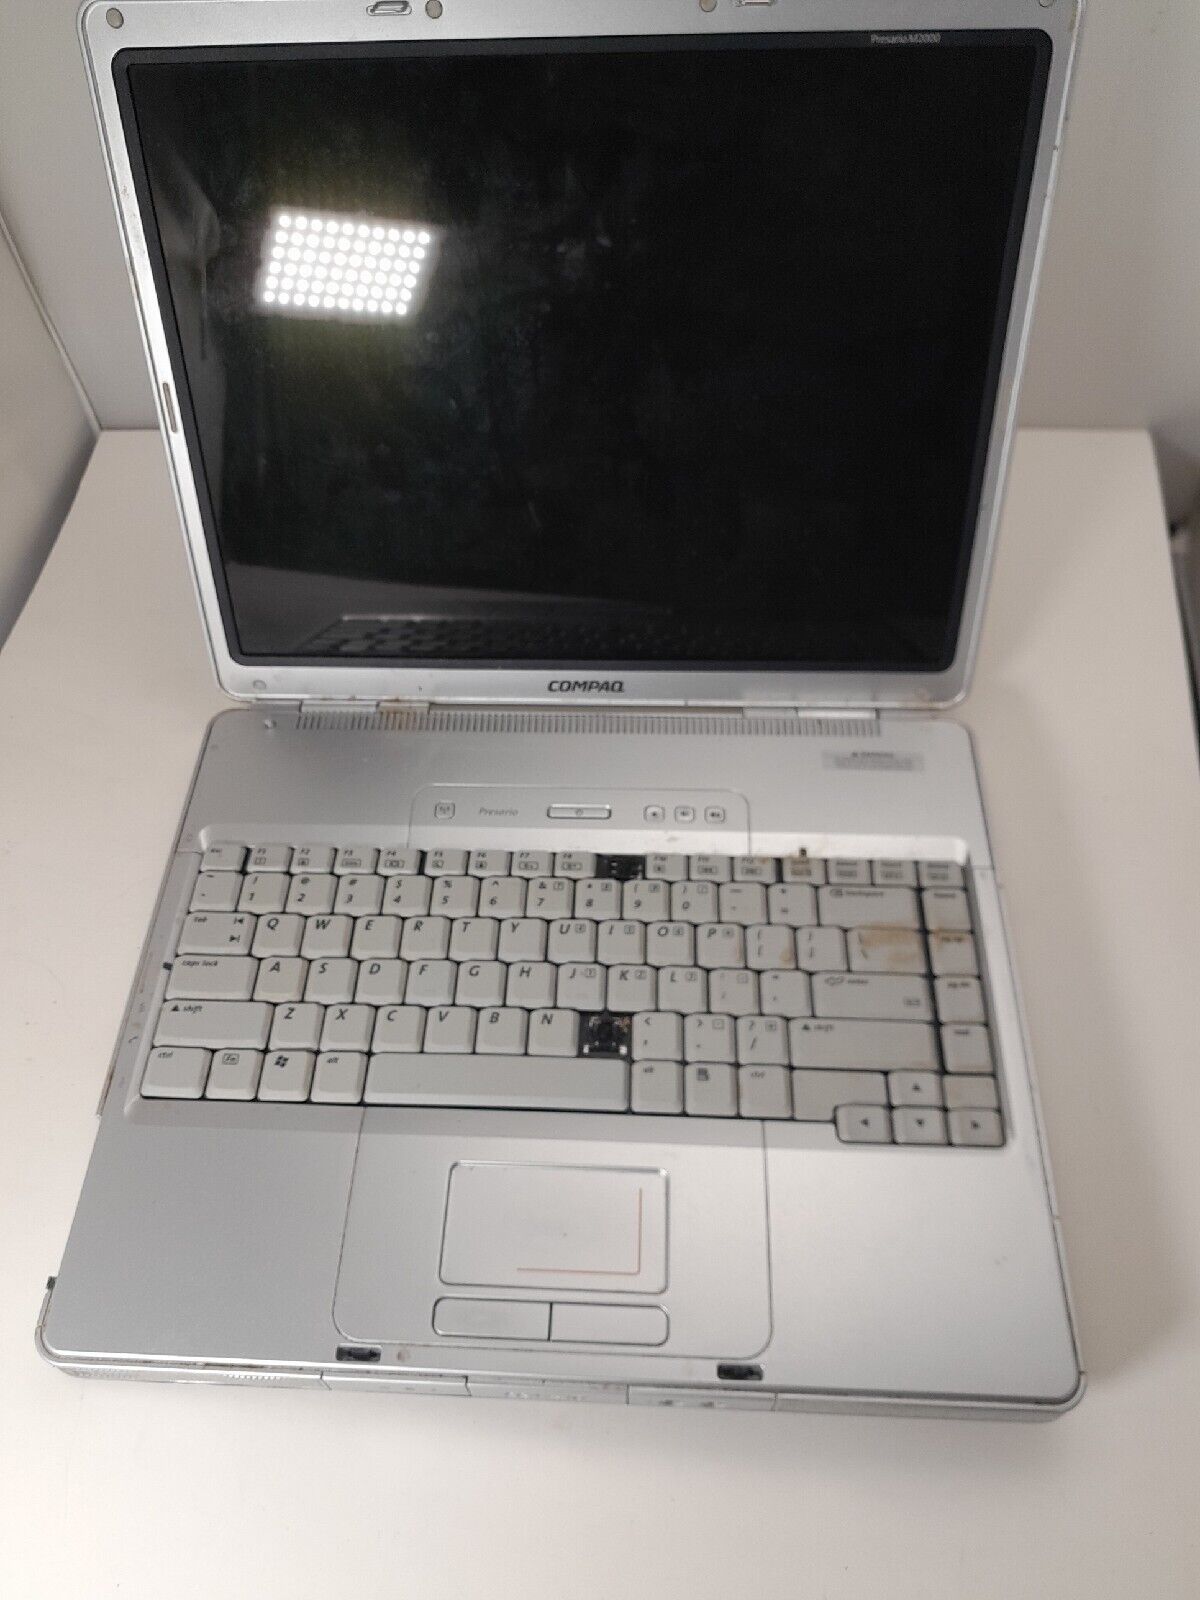 Compaq Presario M2000 Laptop 256mb Ram No HDD Untested AS IS PARTS OR REPAIR 